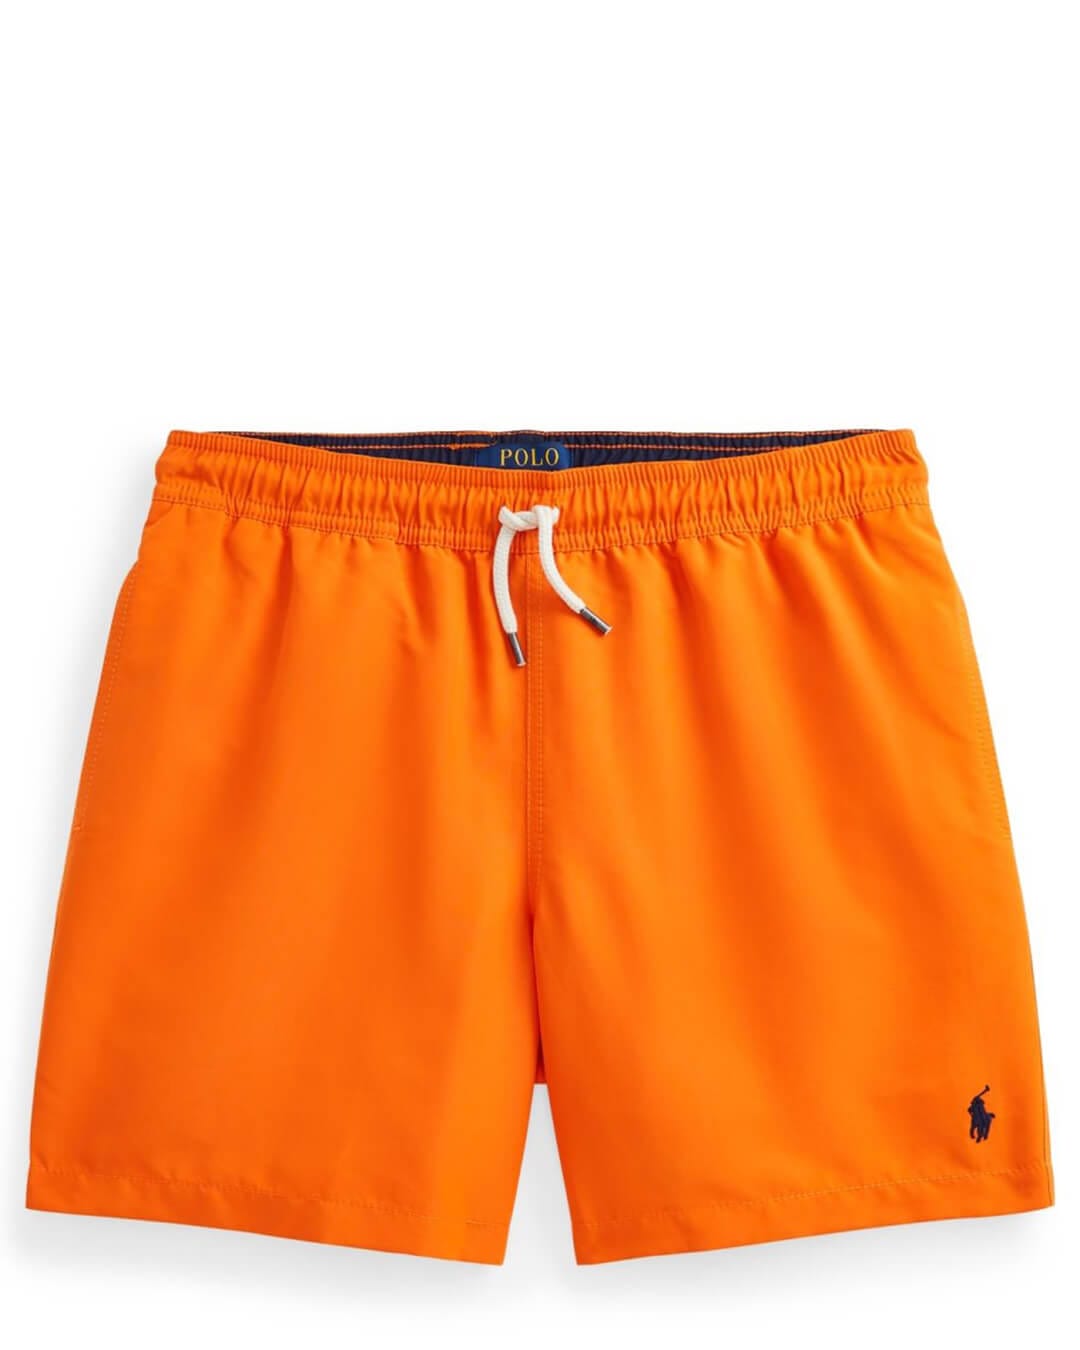 Polo Ralph Lauren Swimwear Boys Polo Ralph Lauren Traveler Orange Swim Shorts